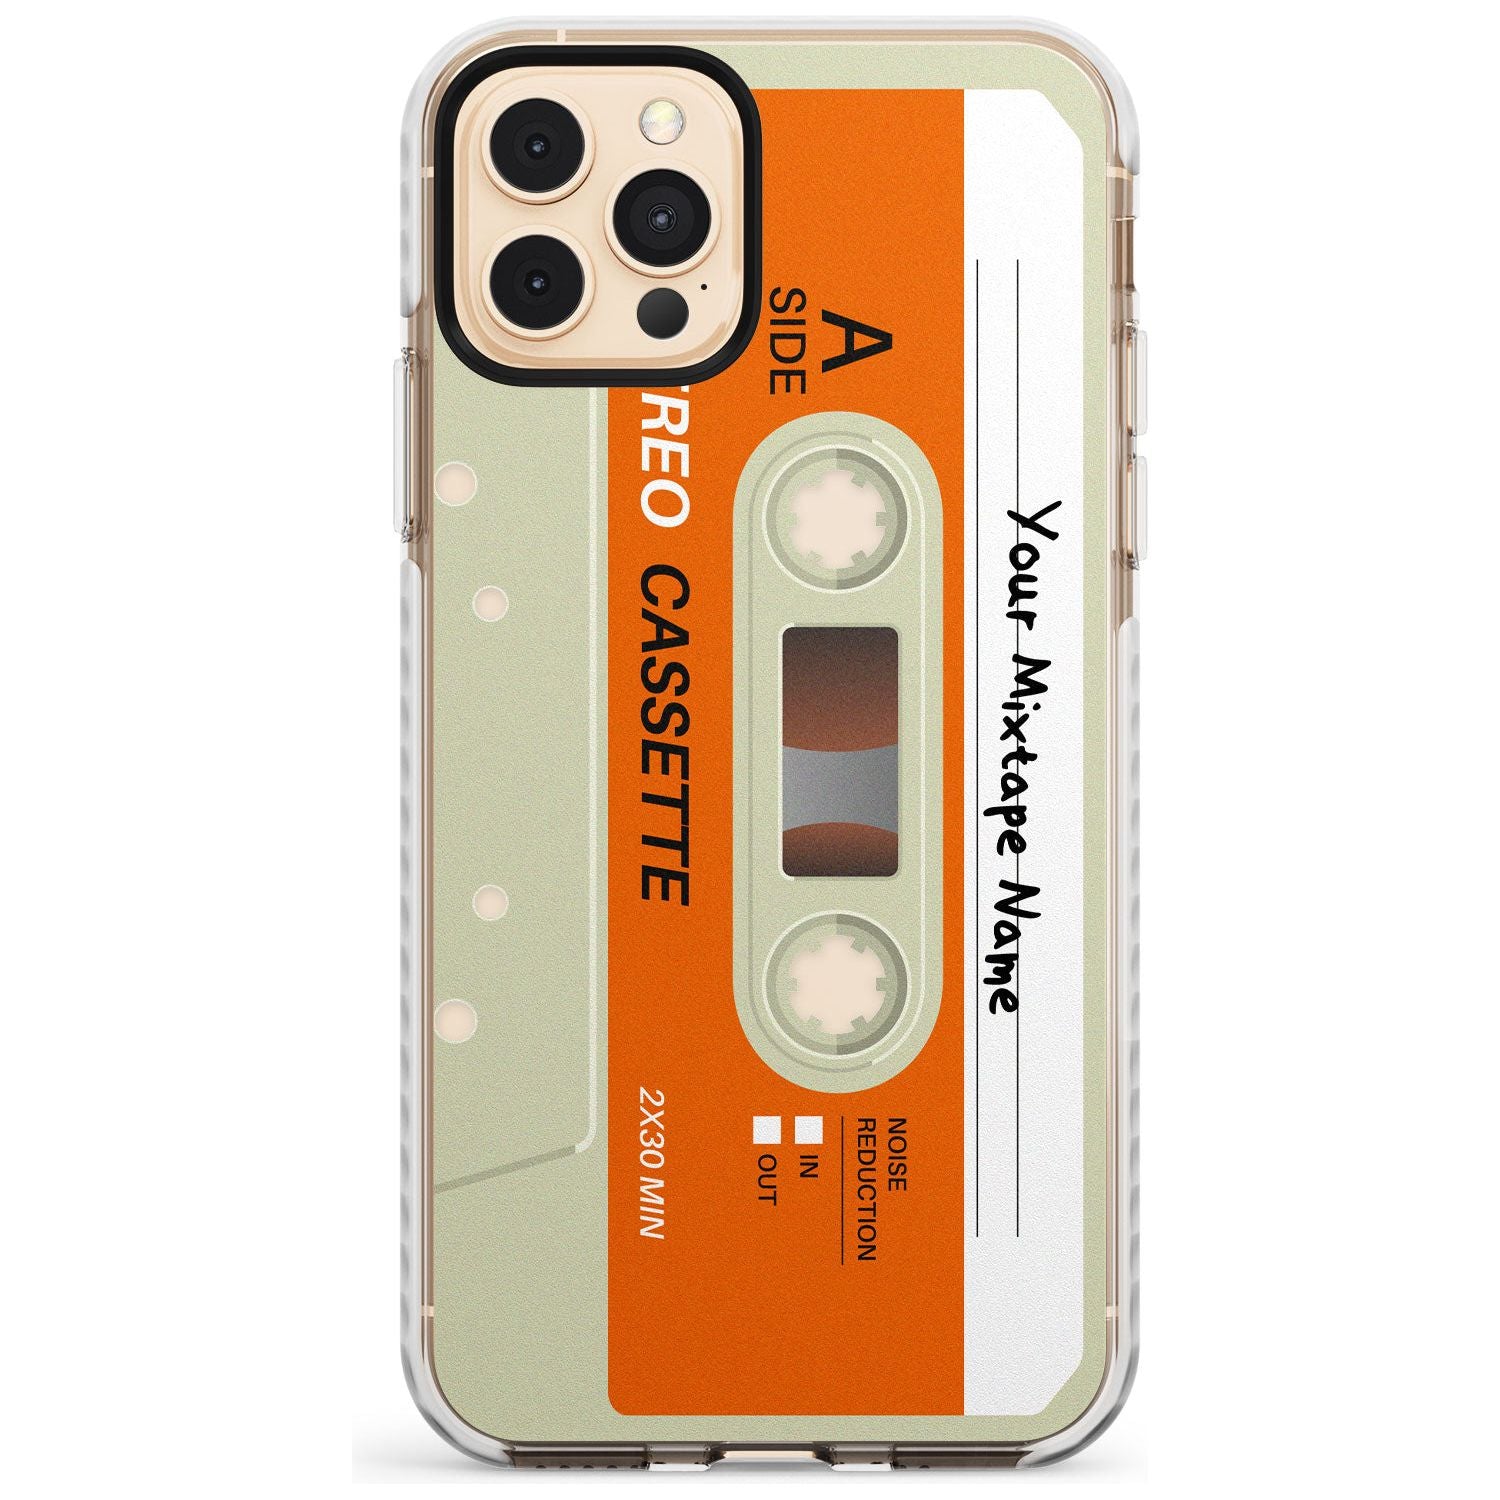 Classic Cassette Slim TPU Phone Case for iPhone 11 Pro Max